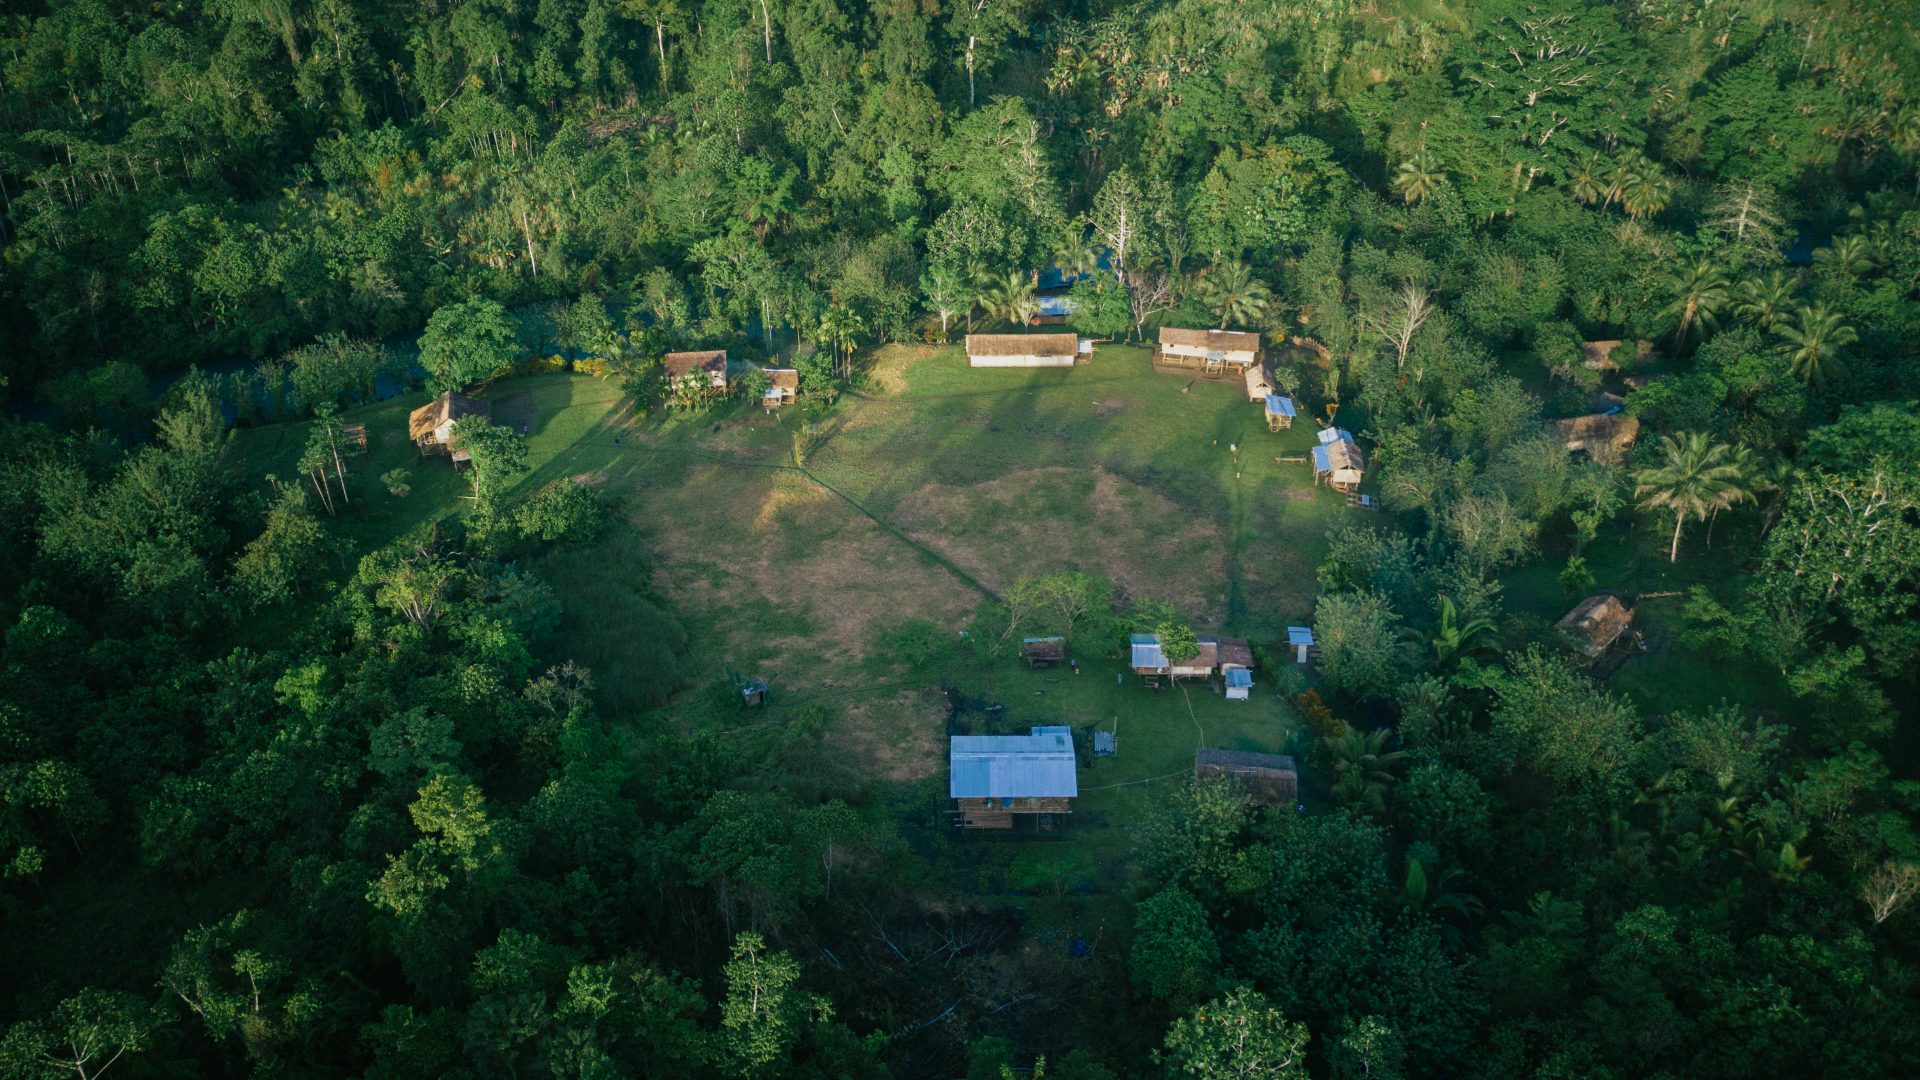 Imagen aérea de un claro de aldea rodeado de bosque.